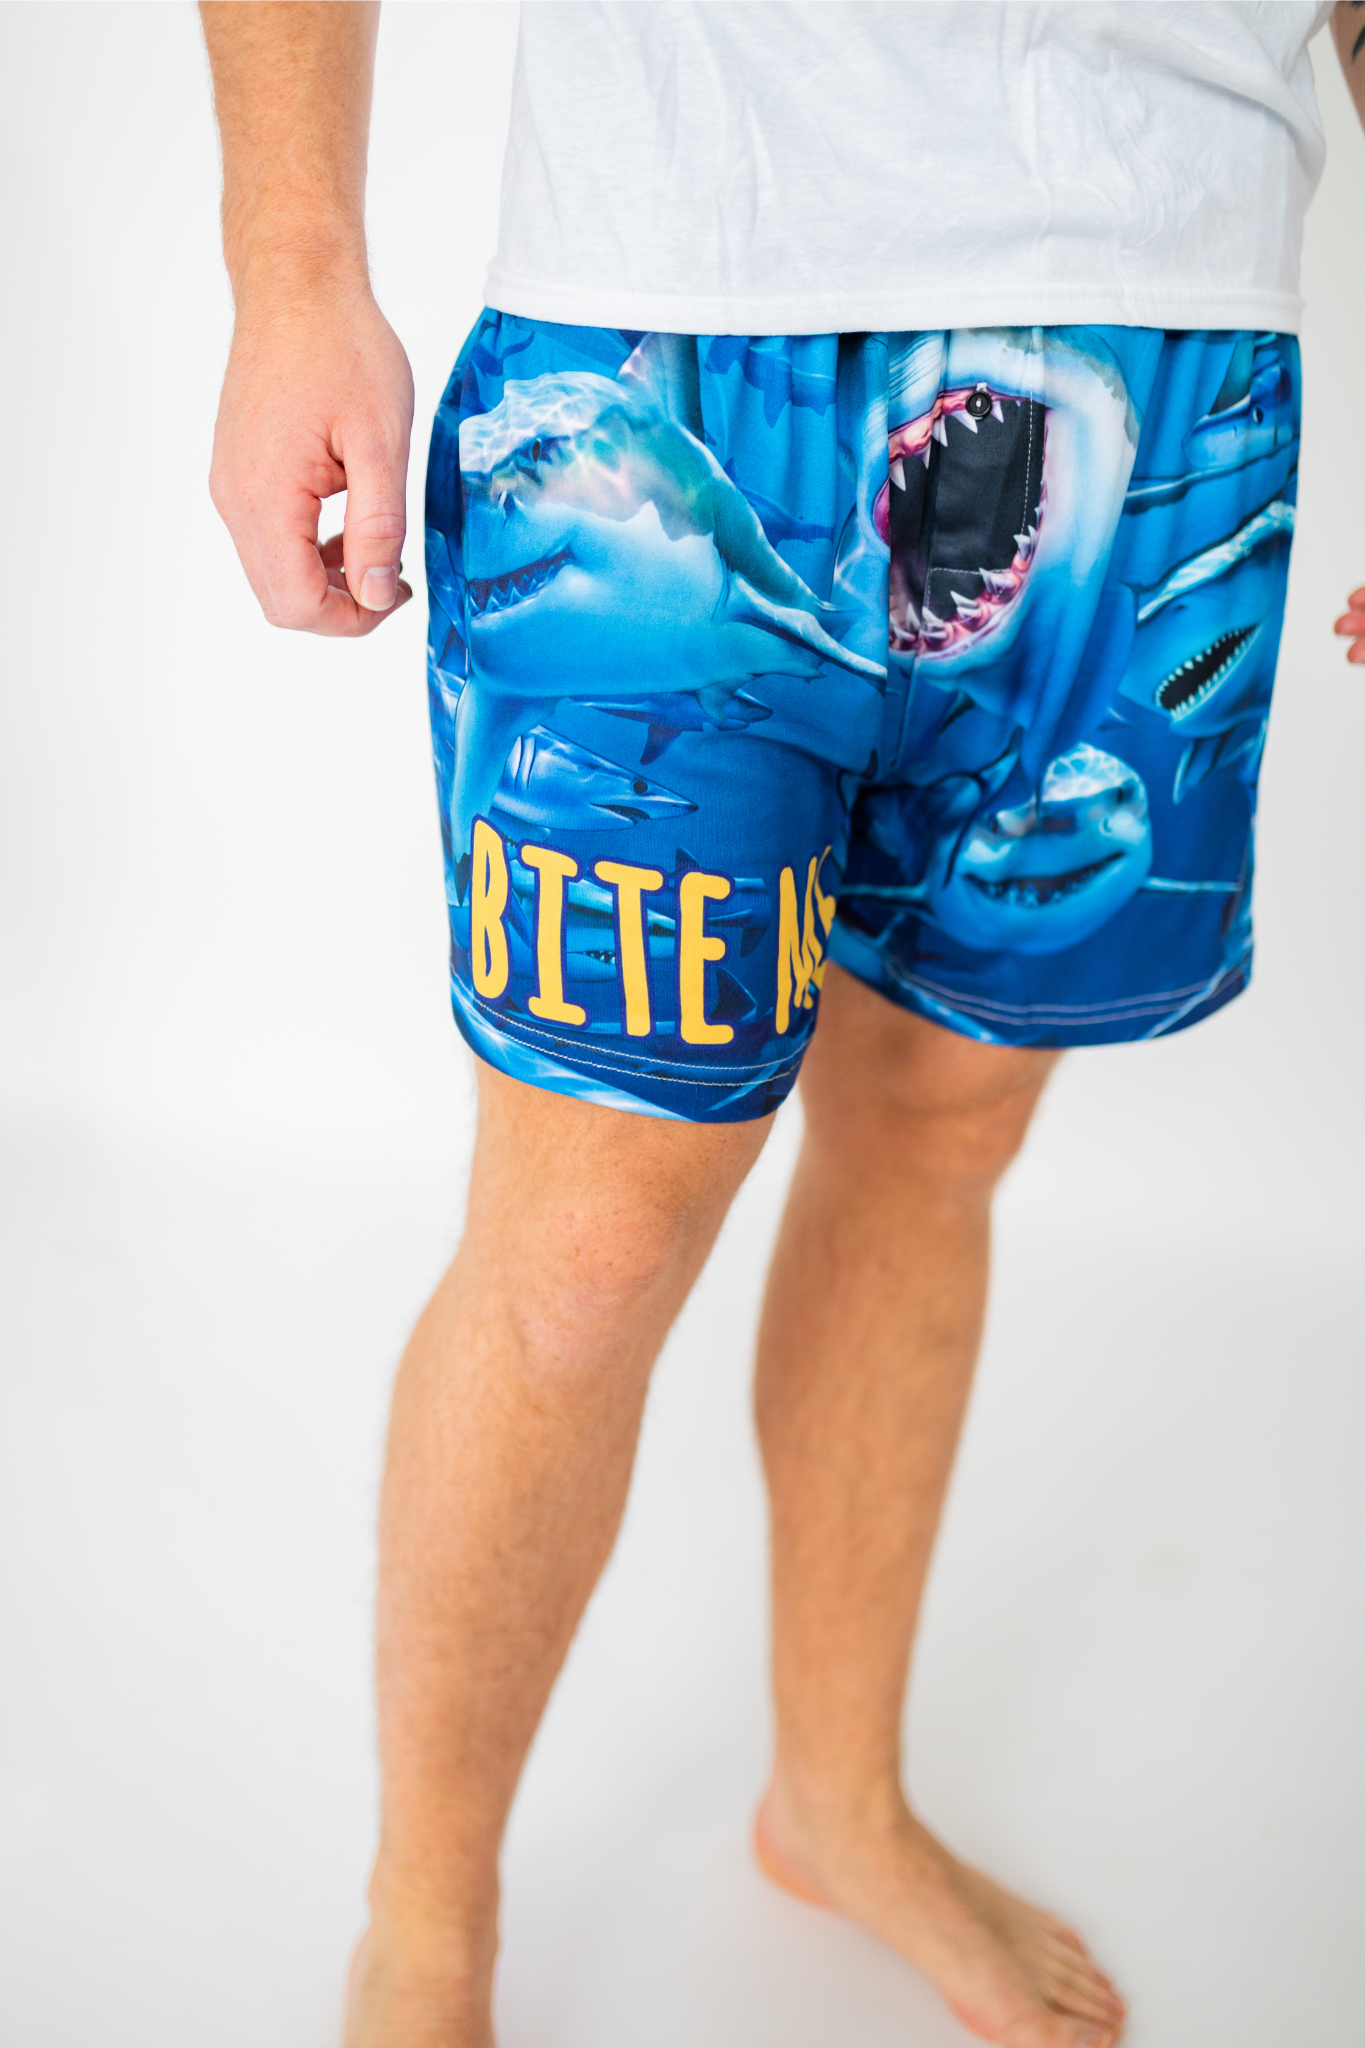 Shark Bite Me Boxer Shorts, Brief Insanity